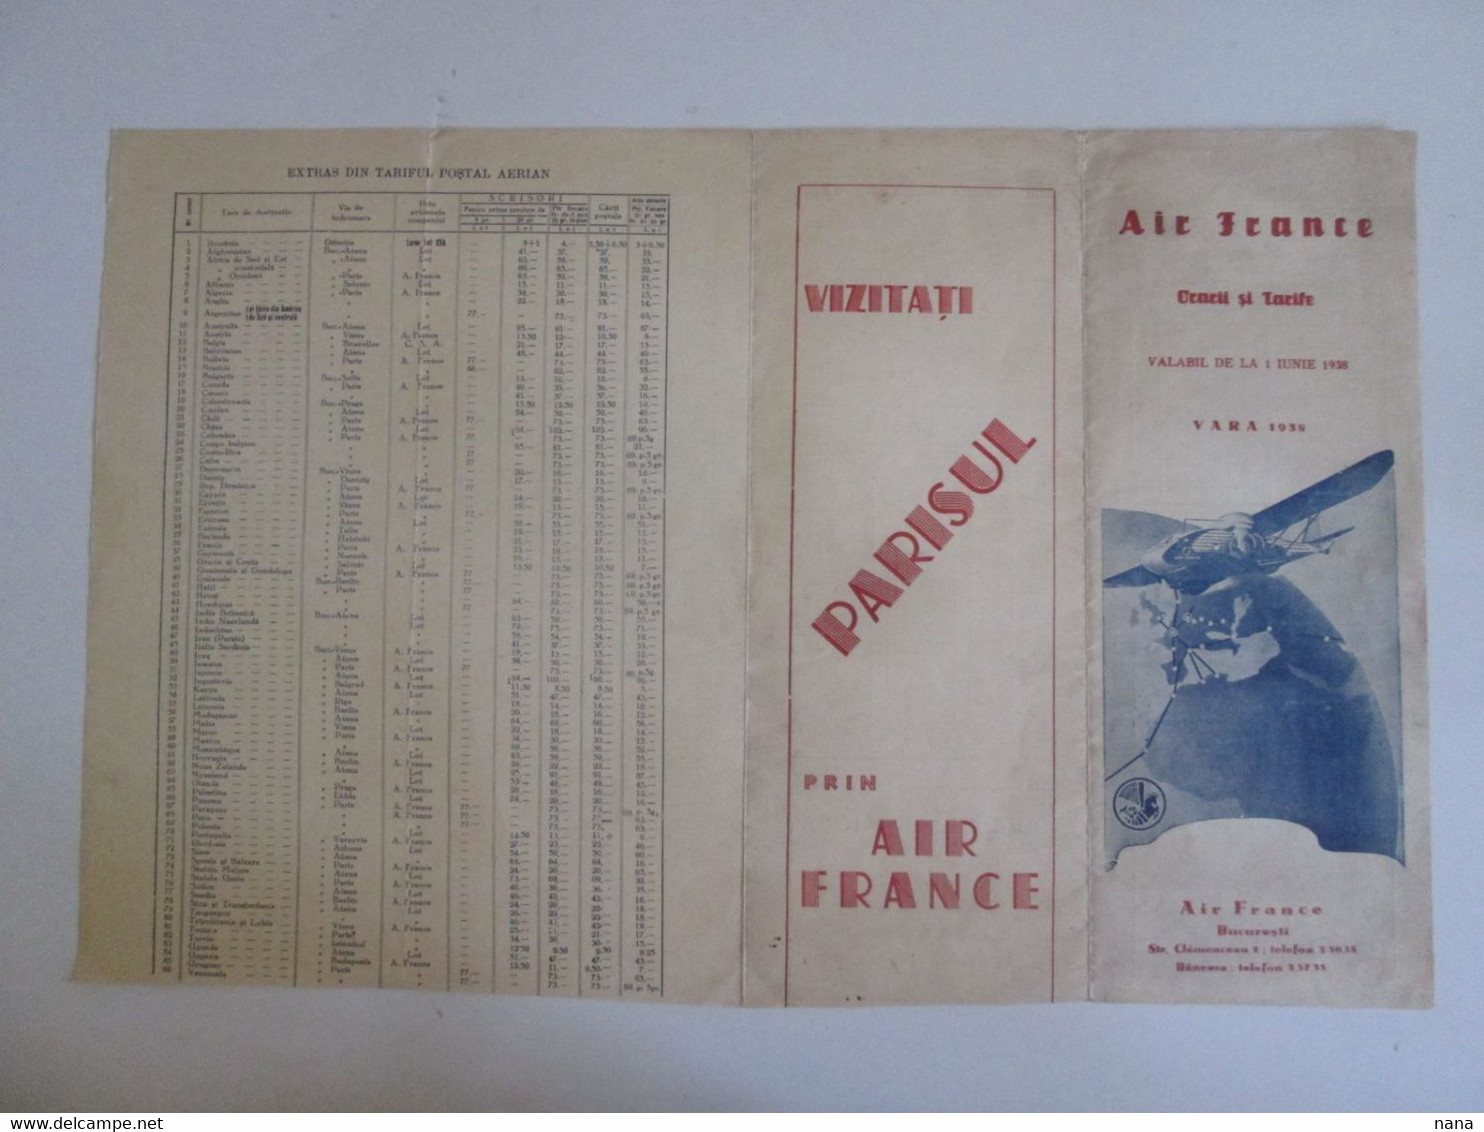 Rare! Air France Horaires Et Tarifs Des Vols Ete 1938 En Roumain/Air France Summer 1938 Timetable & Prices In Romanian - Timetables